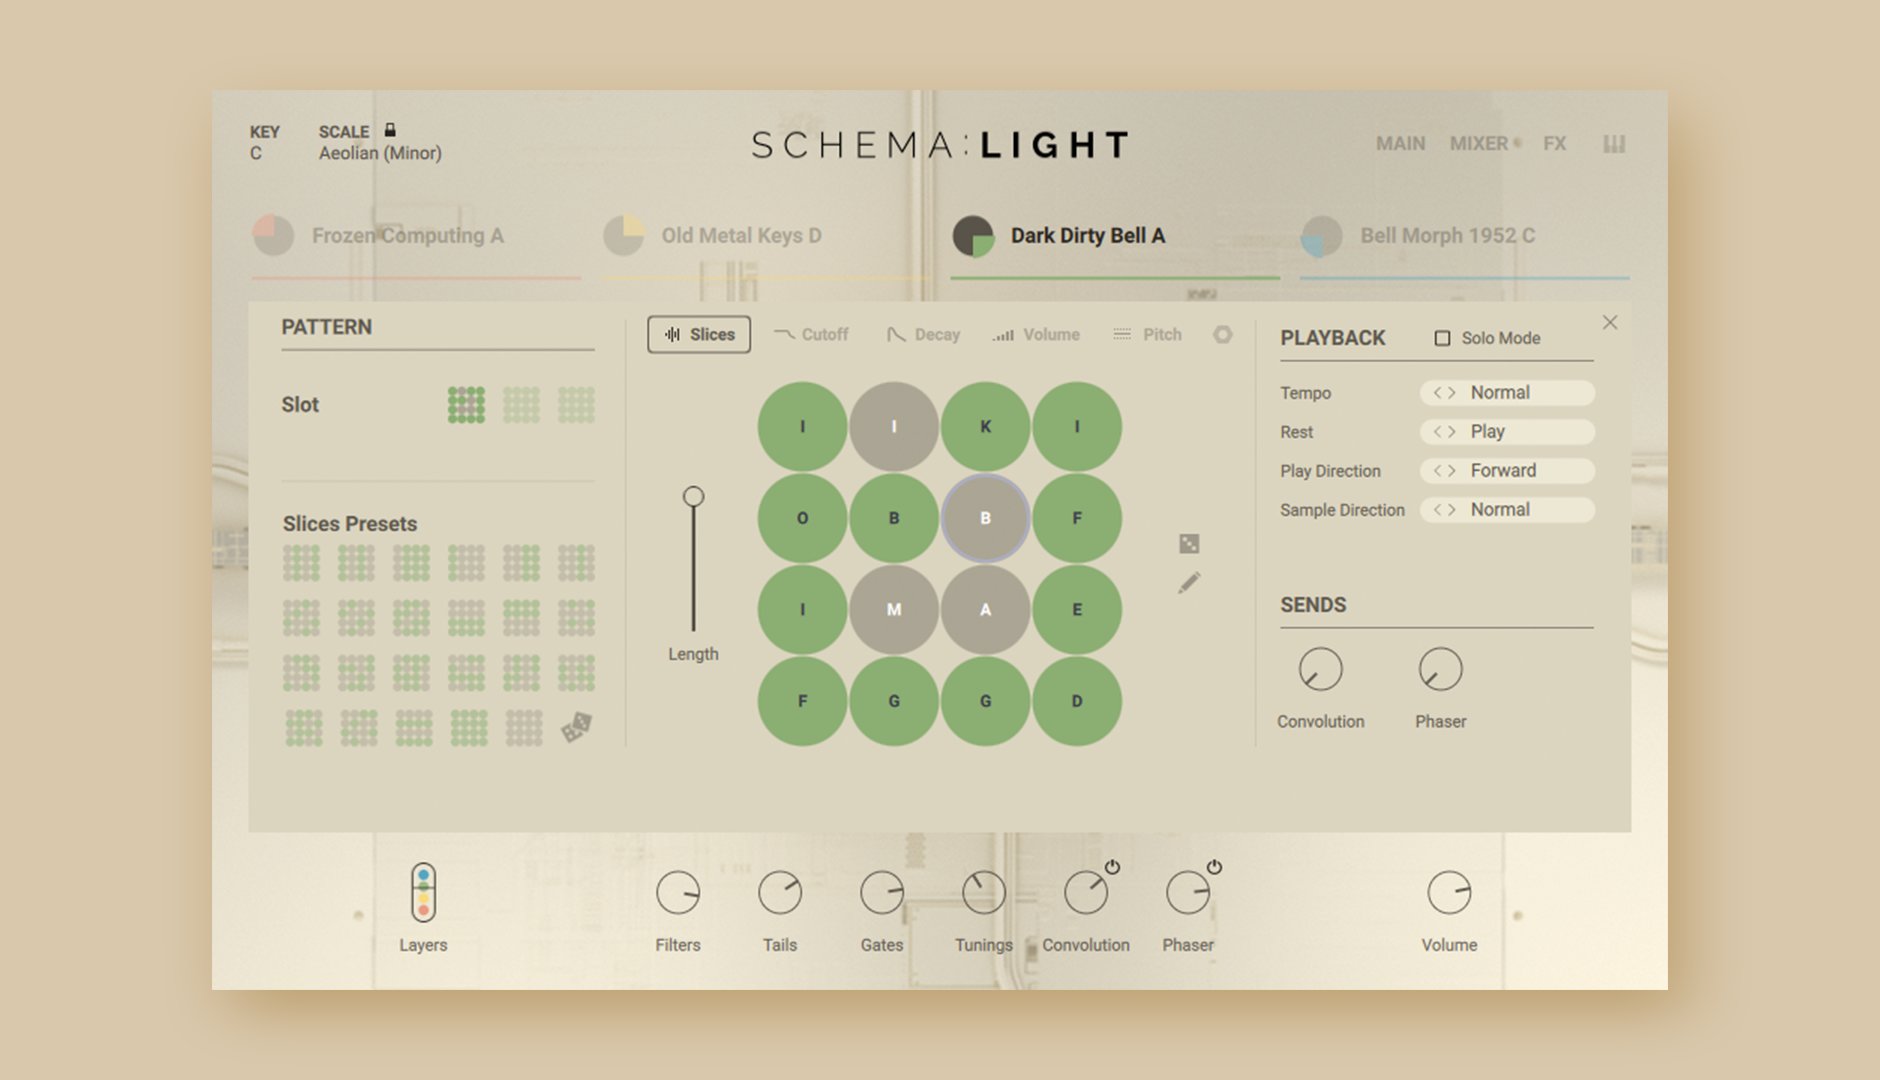 Schema: Light product image